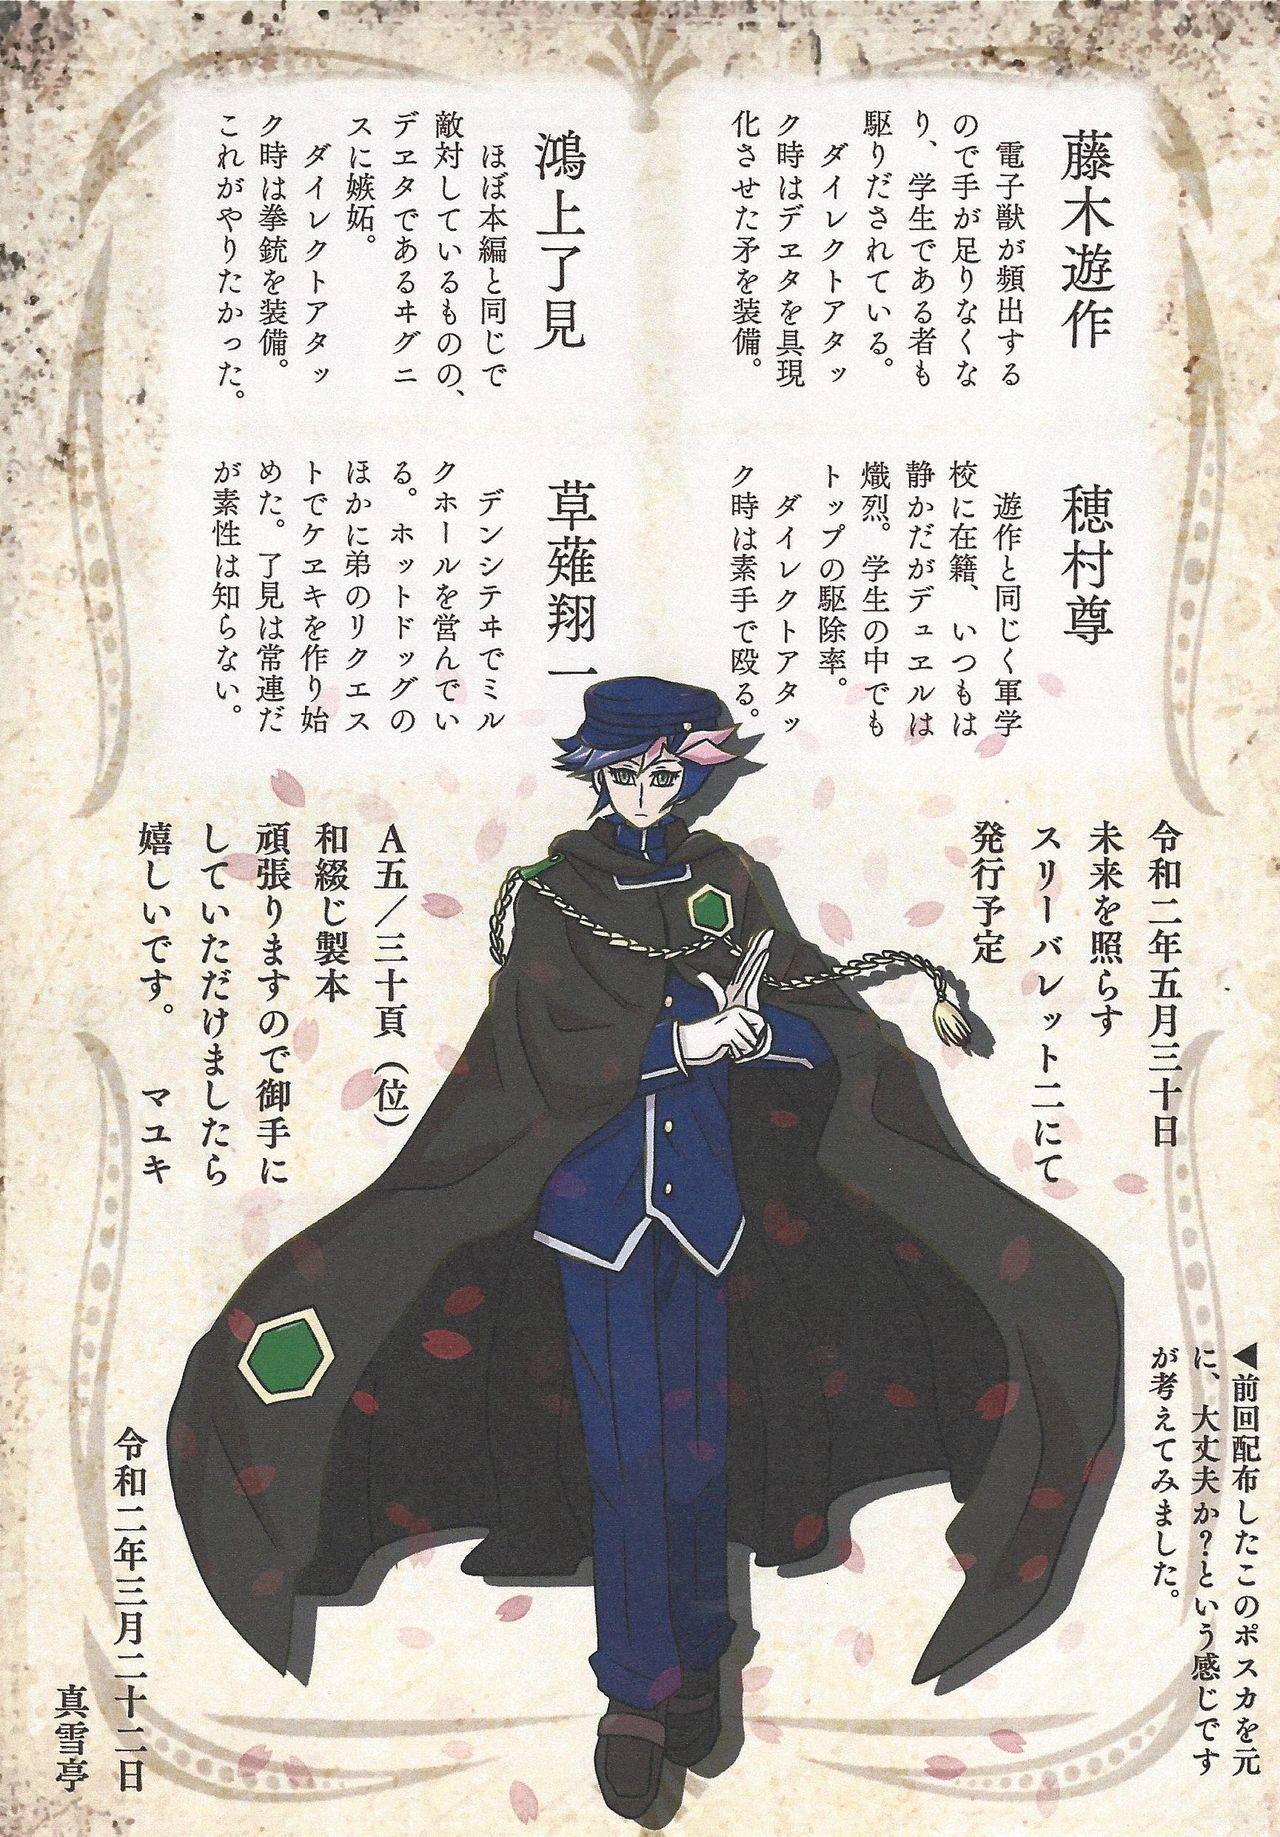 Uniform Ura yūgeki seshi mono wa, ryōzentaruya. - Yu-gi-oh vrains Stripper - Page 10